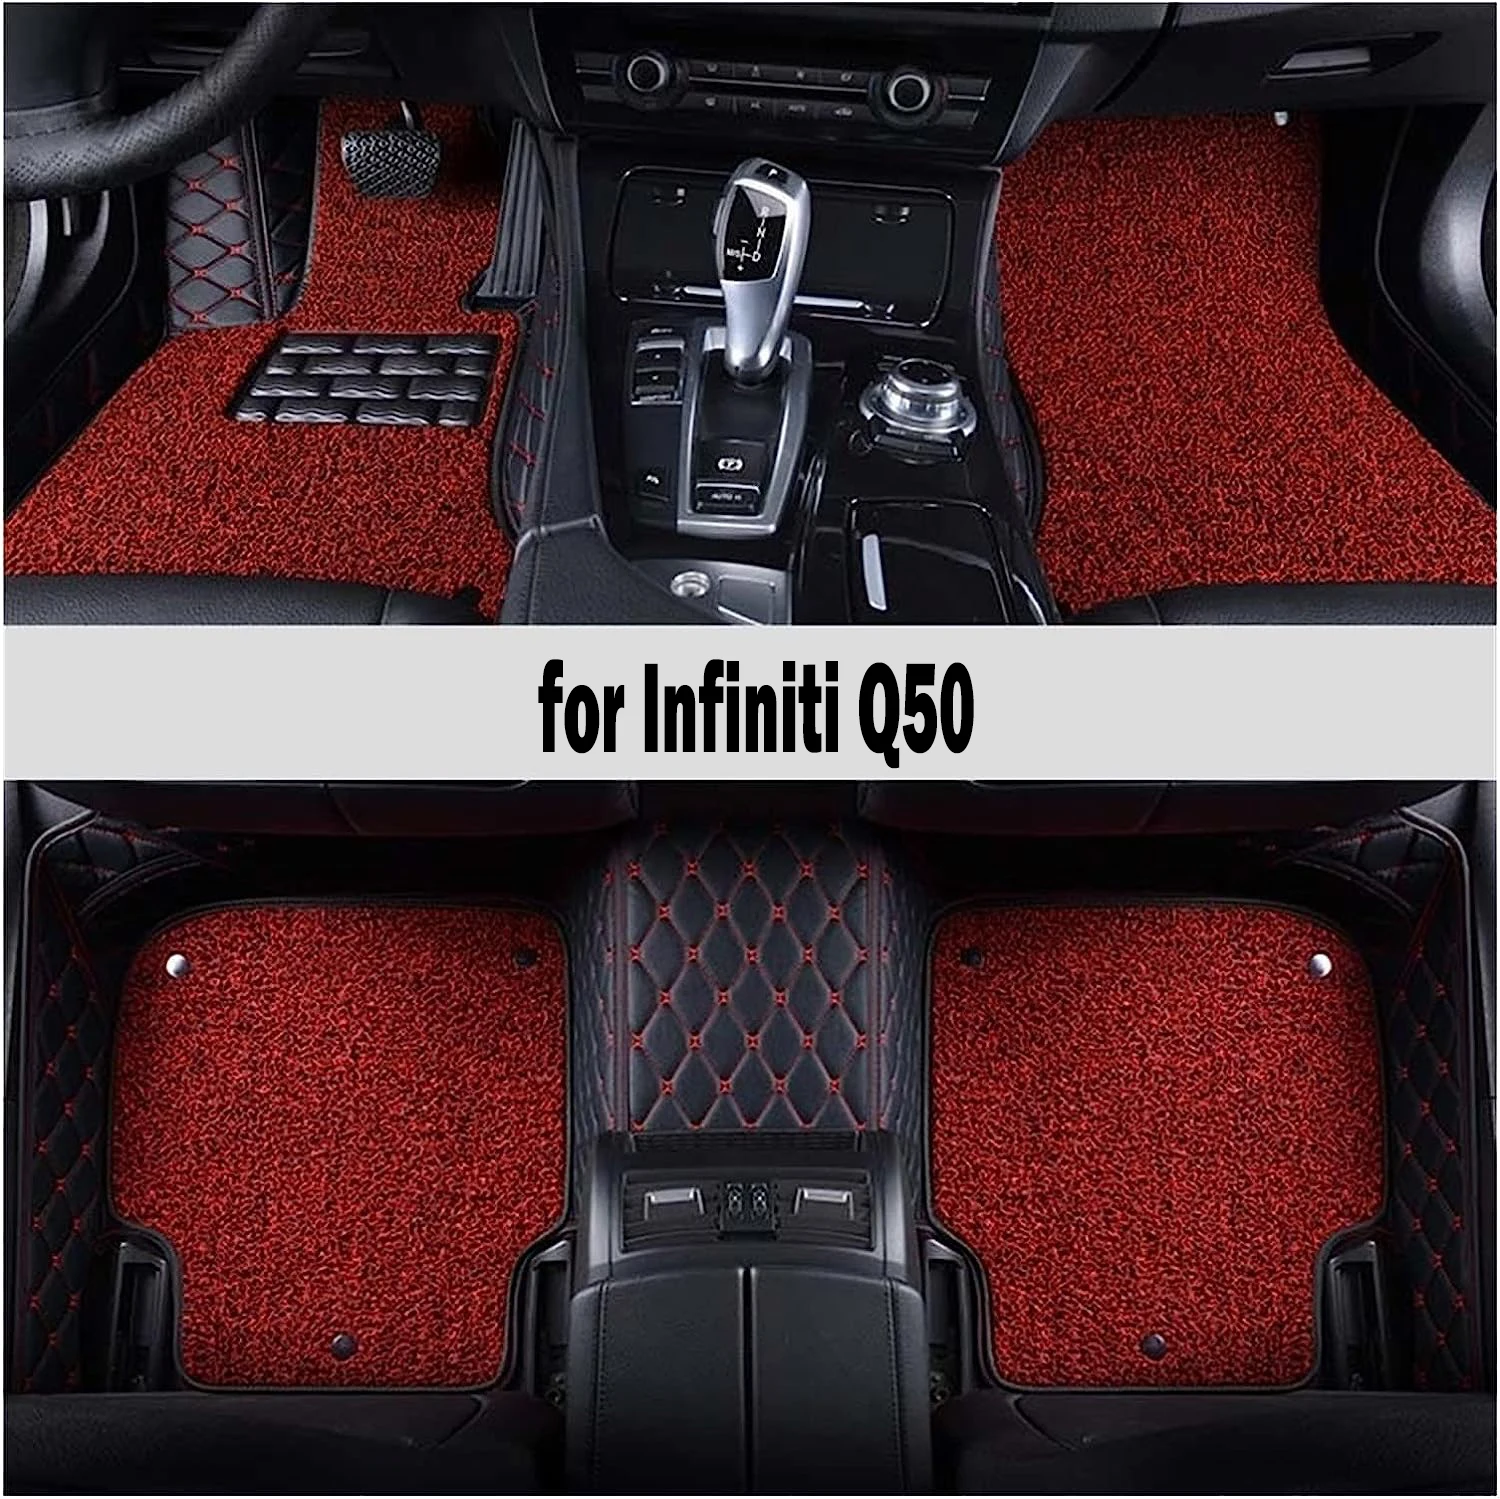 

Custom leather Car Floor Mats For Infiniti Q50 2014 2015 2016 2017 2018 2019 Custom Auto Foot Pads Automobile Carpet Cover